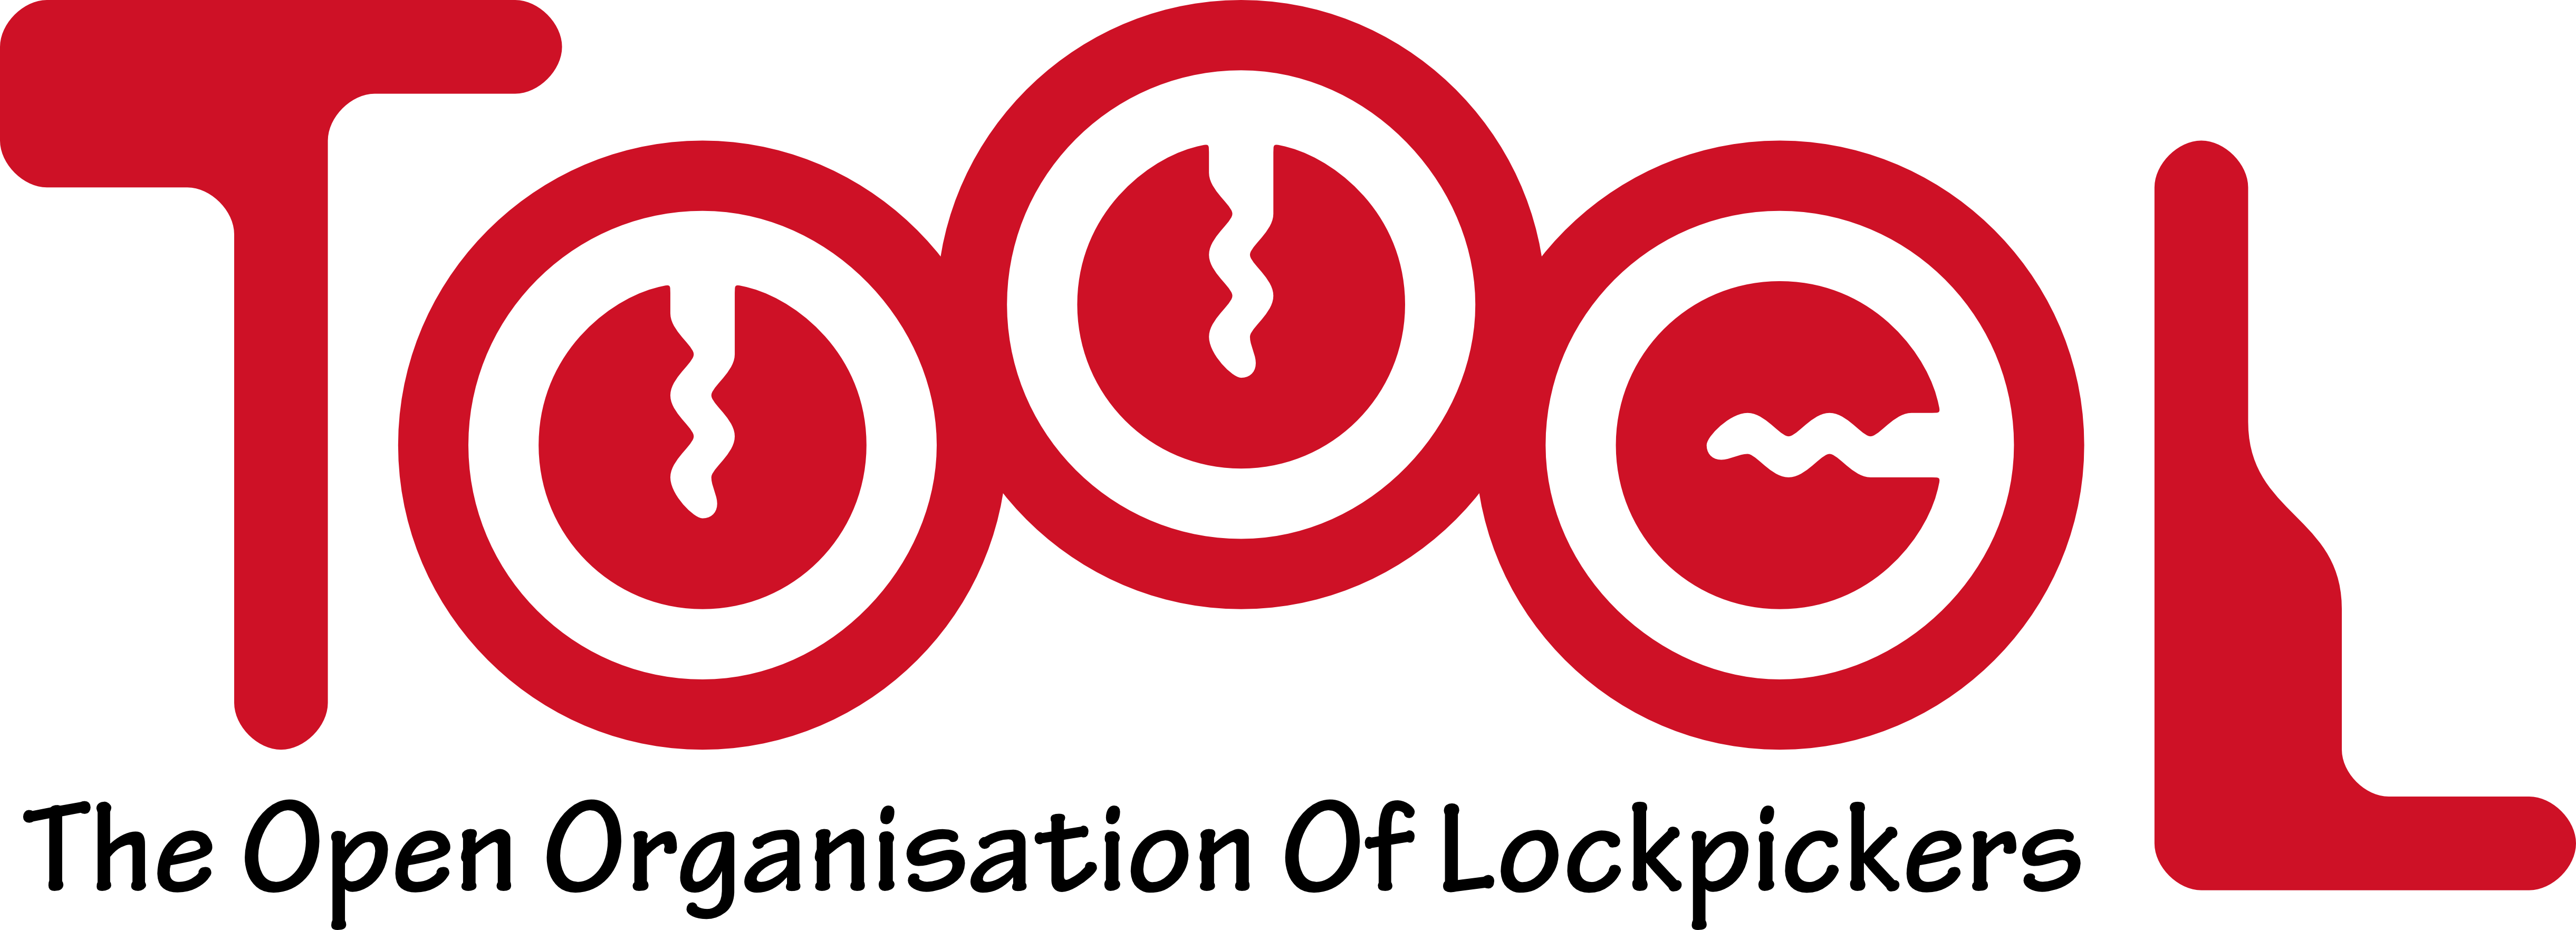 TOOOL_logo